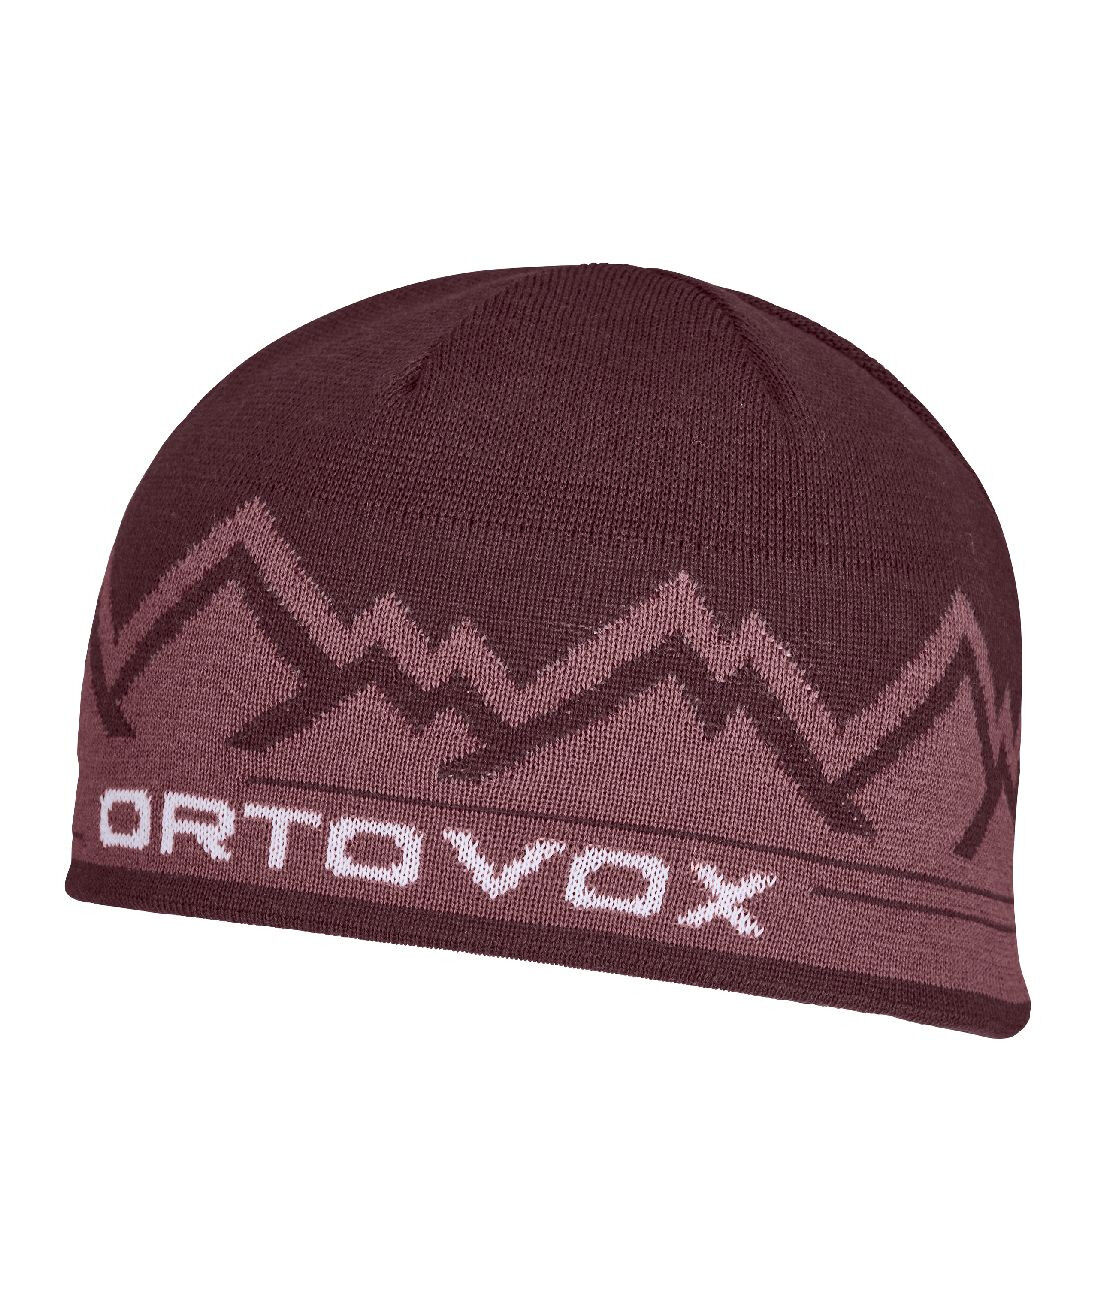 Ortovox Peak Beanie - Mössa